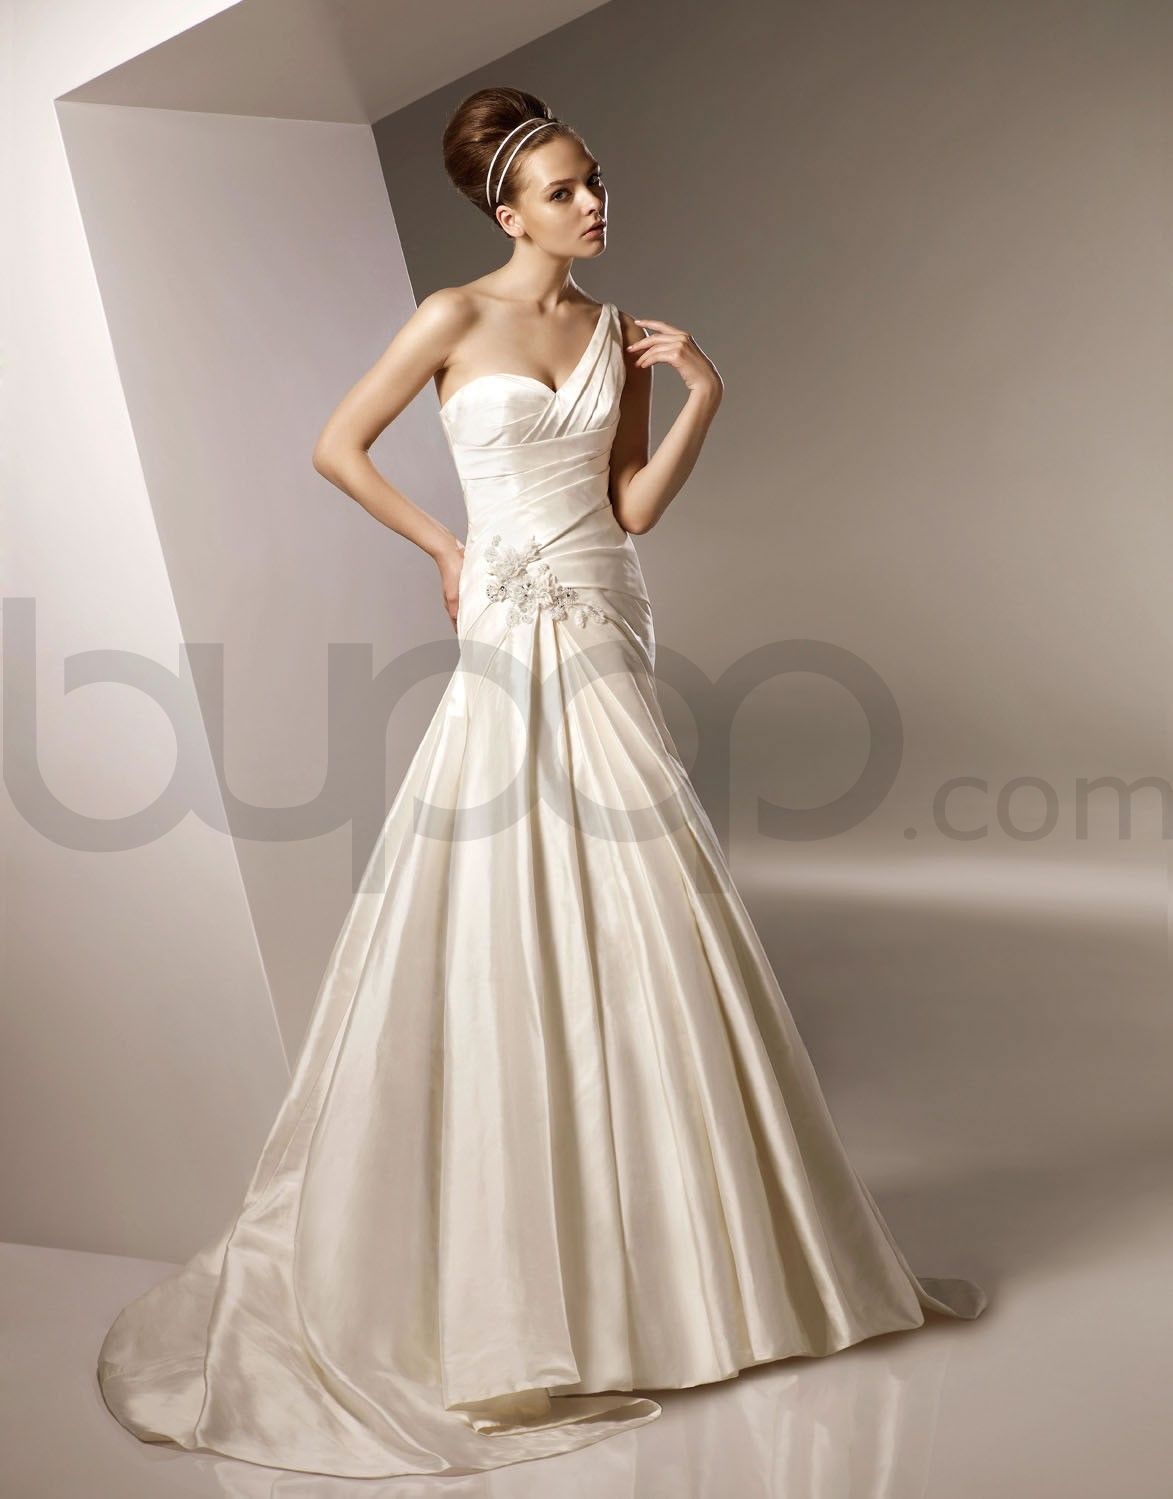 Wedding Dress 2013 Trends